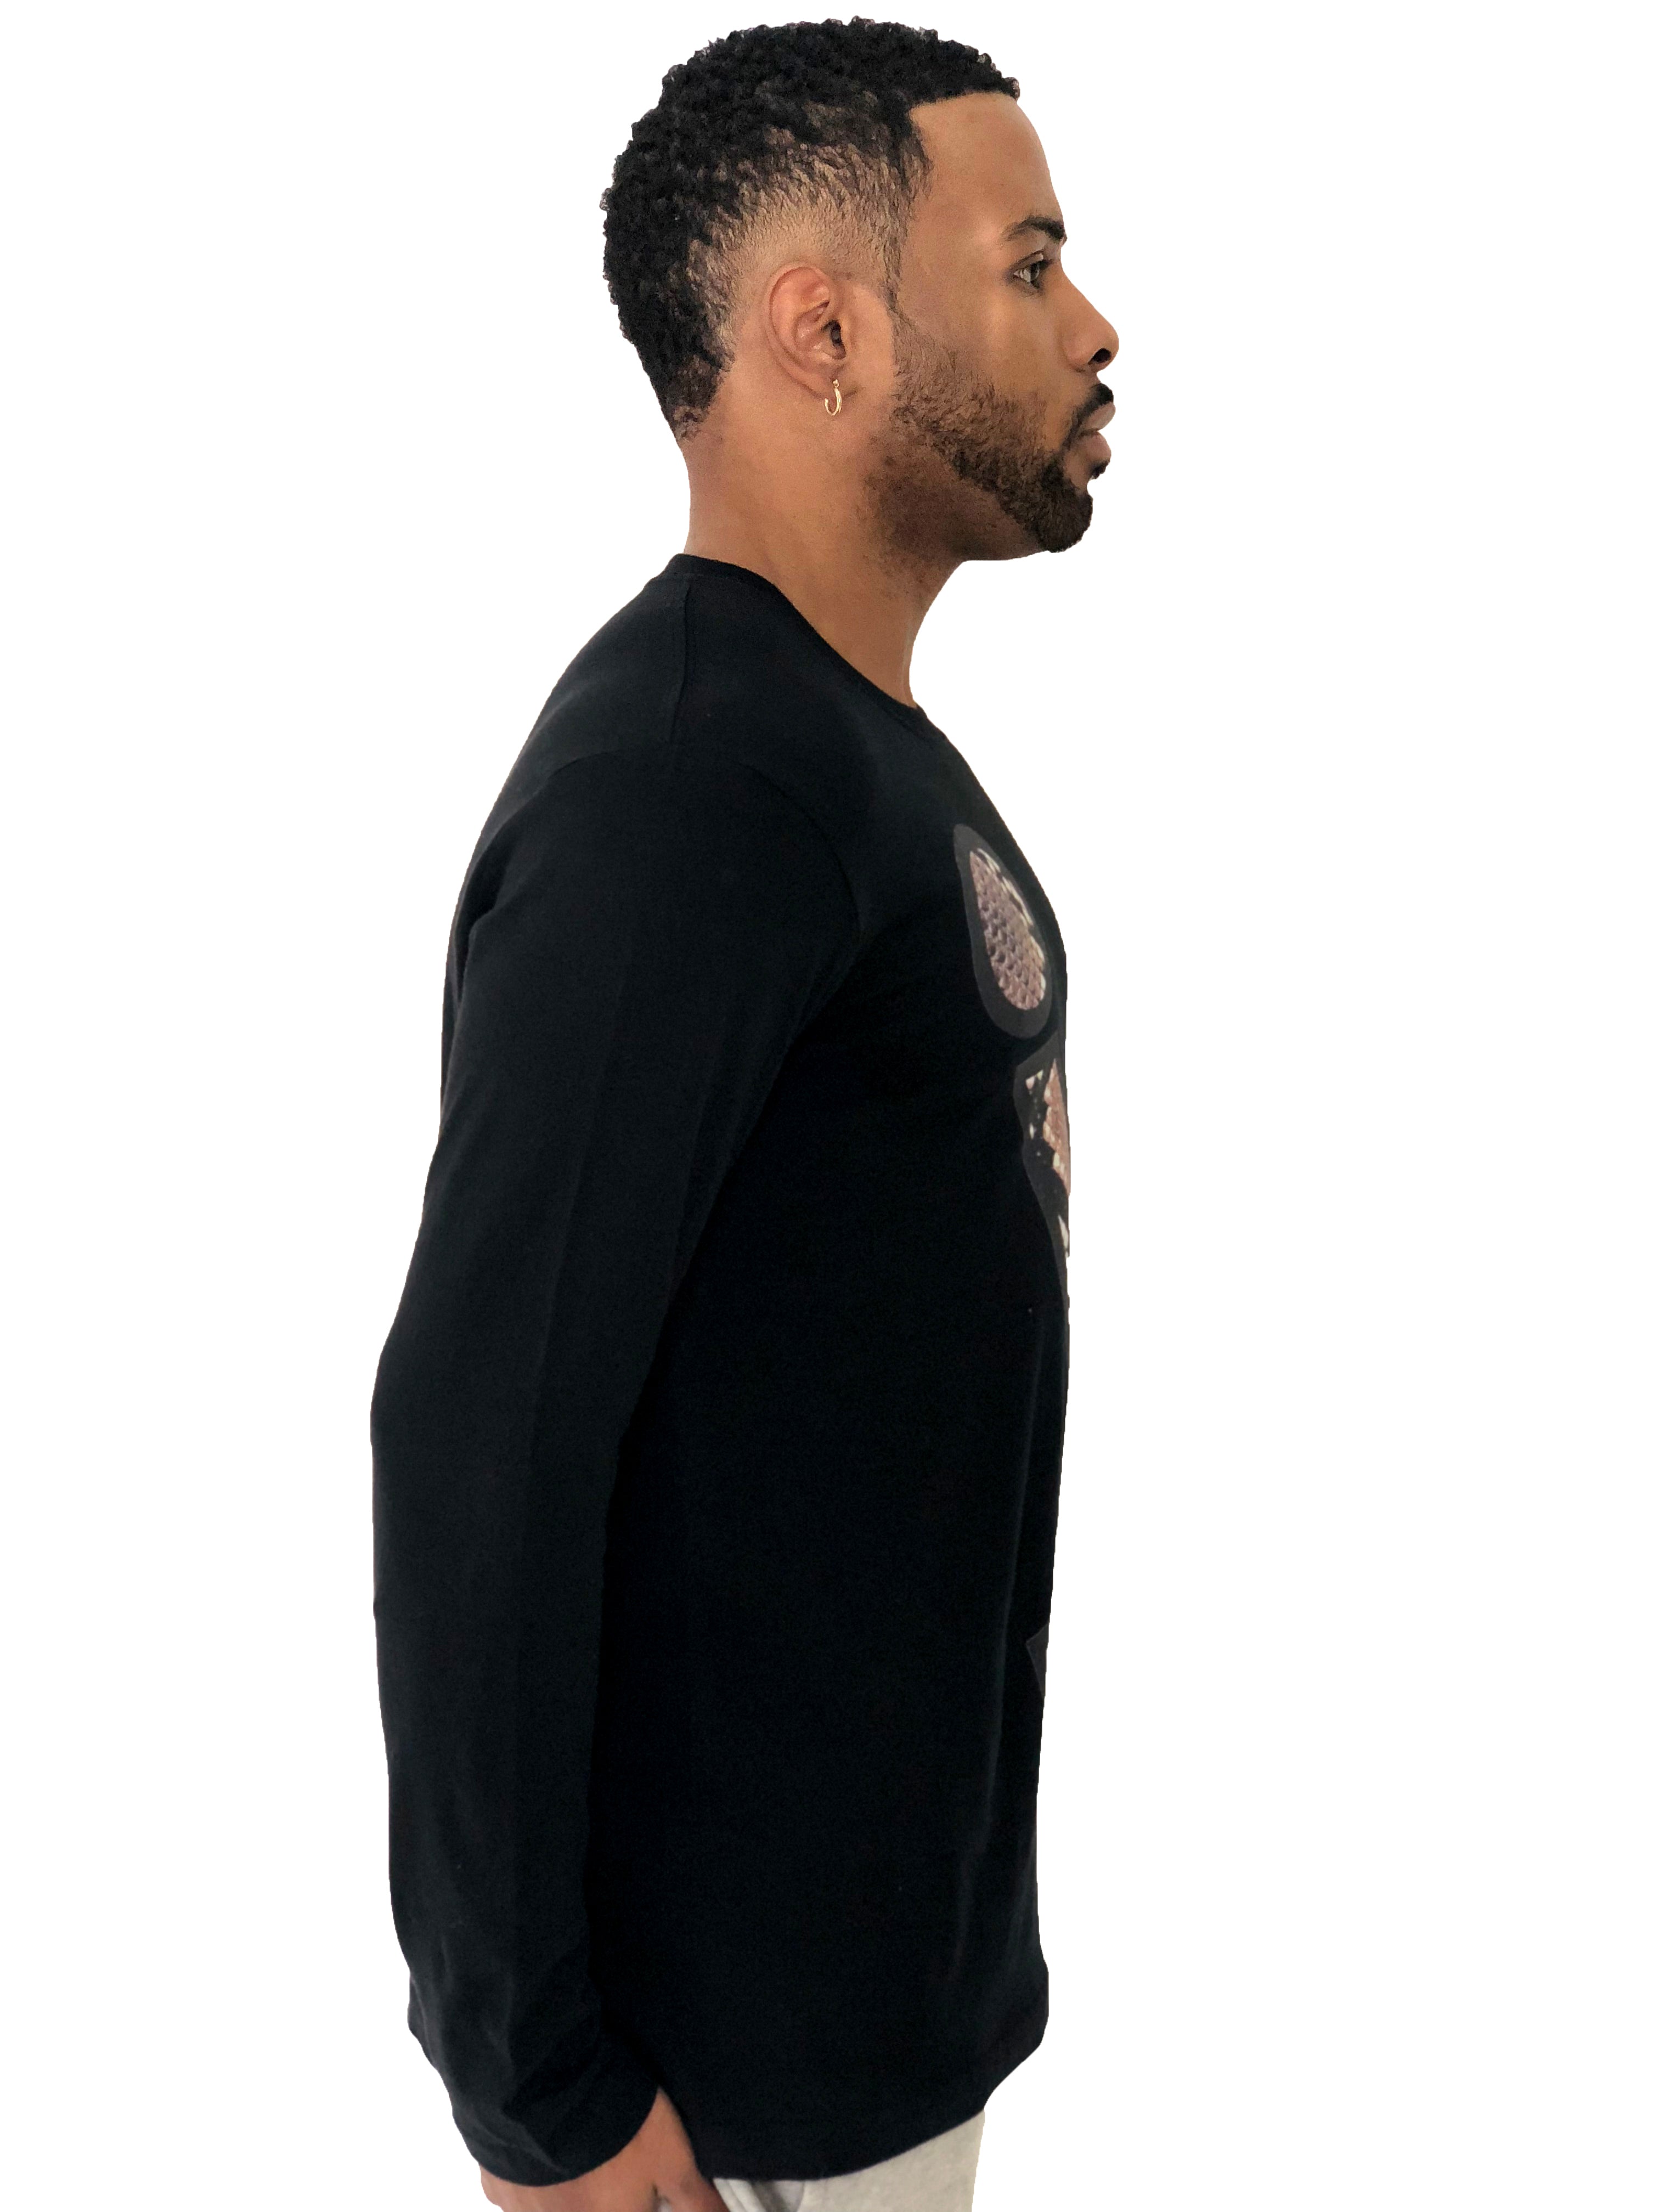 Men T-Shirt "Snake Texture Logo" Long Sleeved Black by iacobuccyounes Italy - Brit Boss 